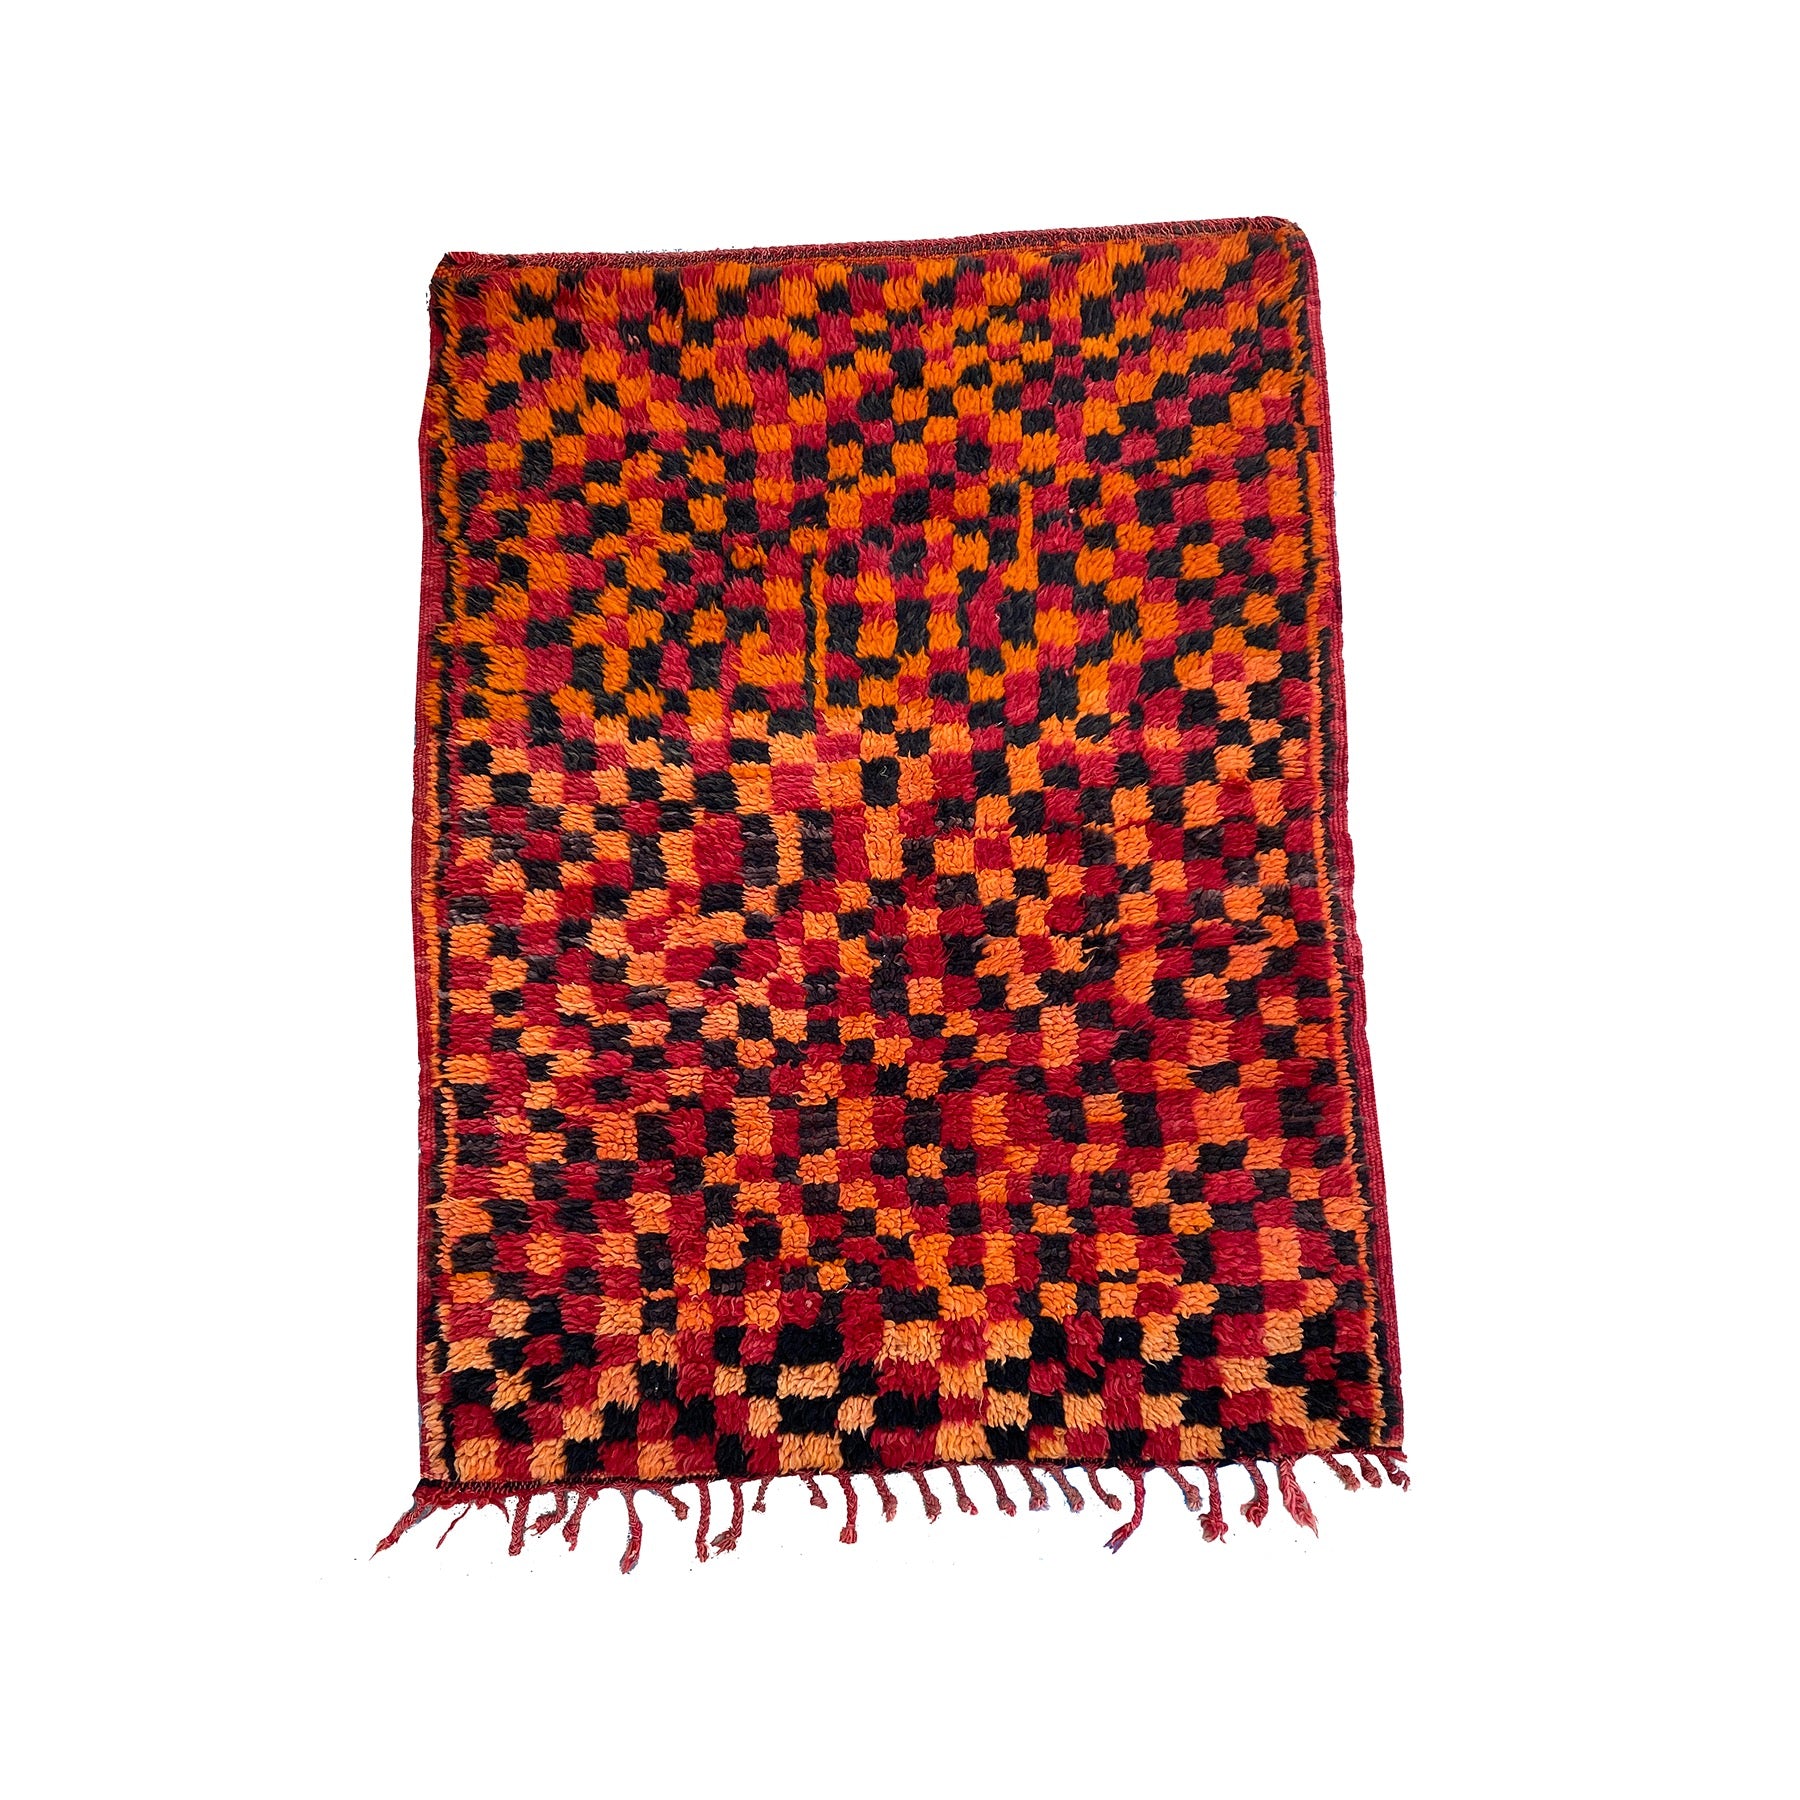 Red, orange, and yellow Moroccan checkerboard throw rug - Kantara | Moroccan Rugs